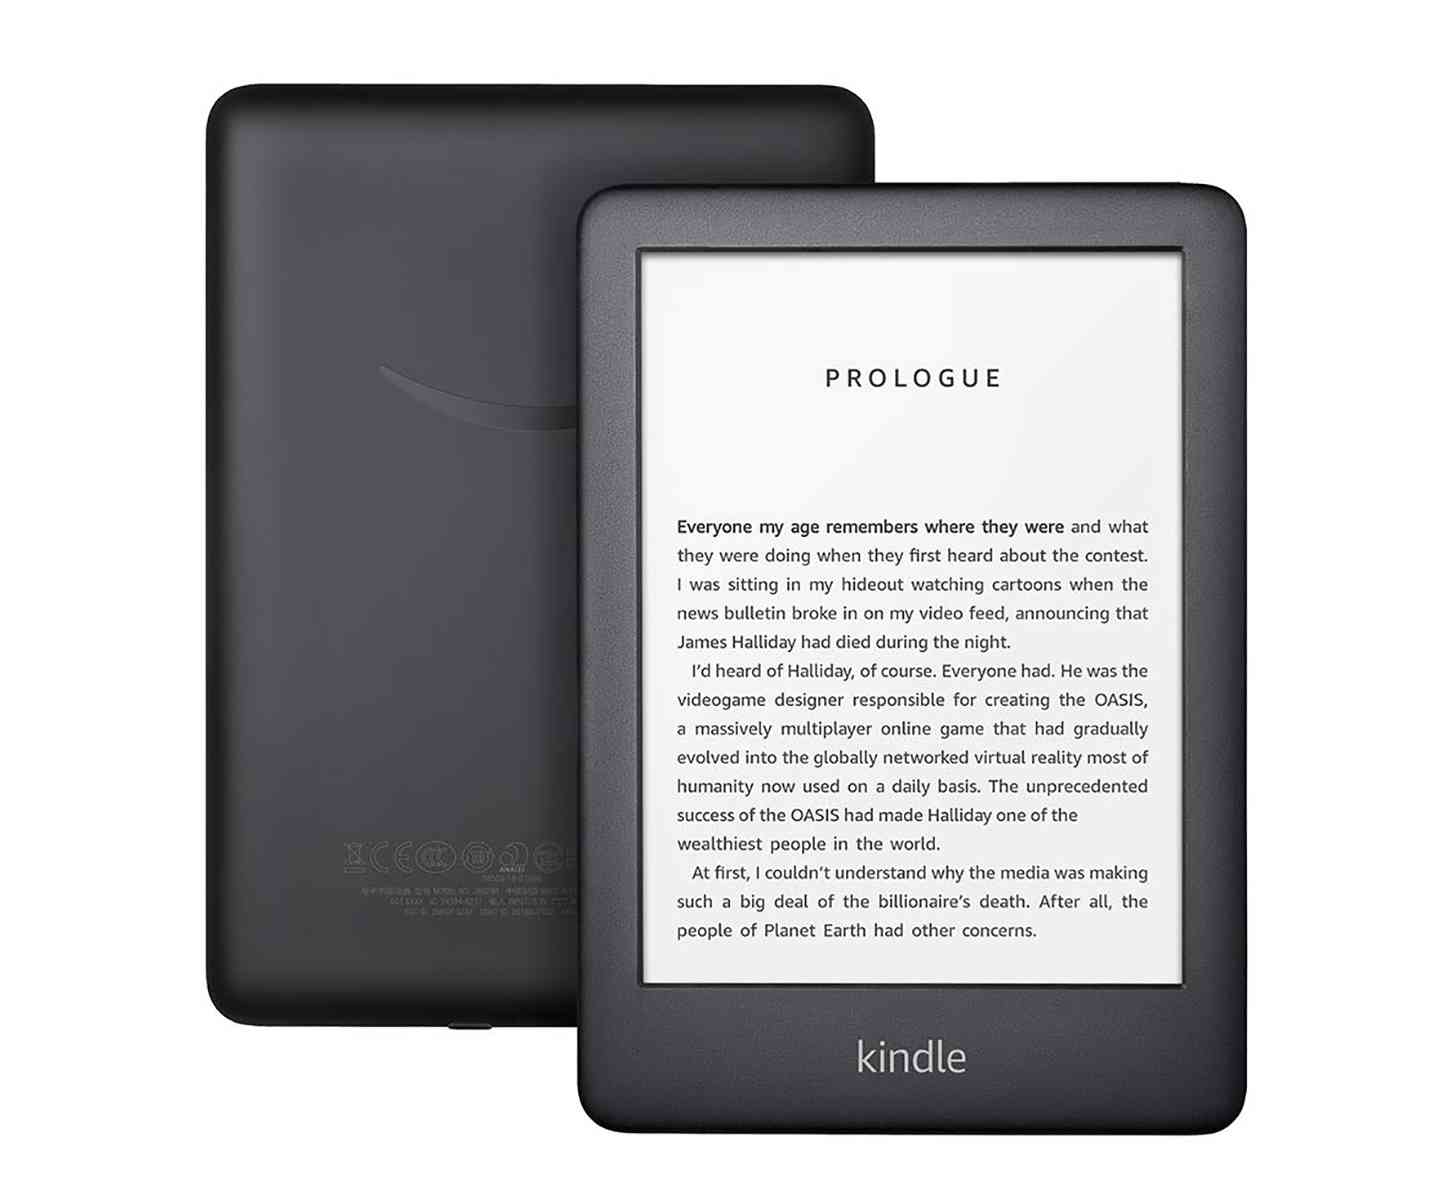 Amazon Kindle built-in light